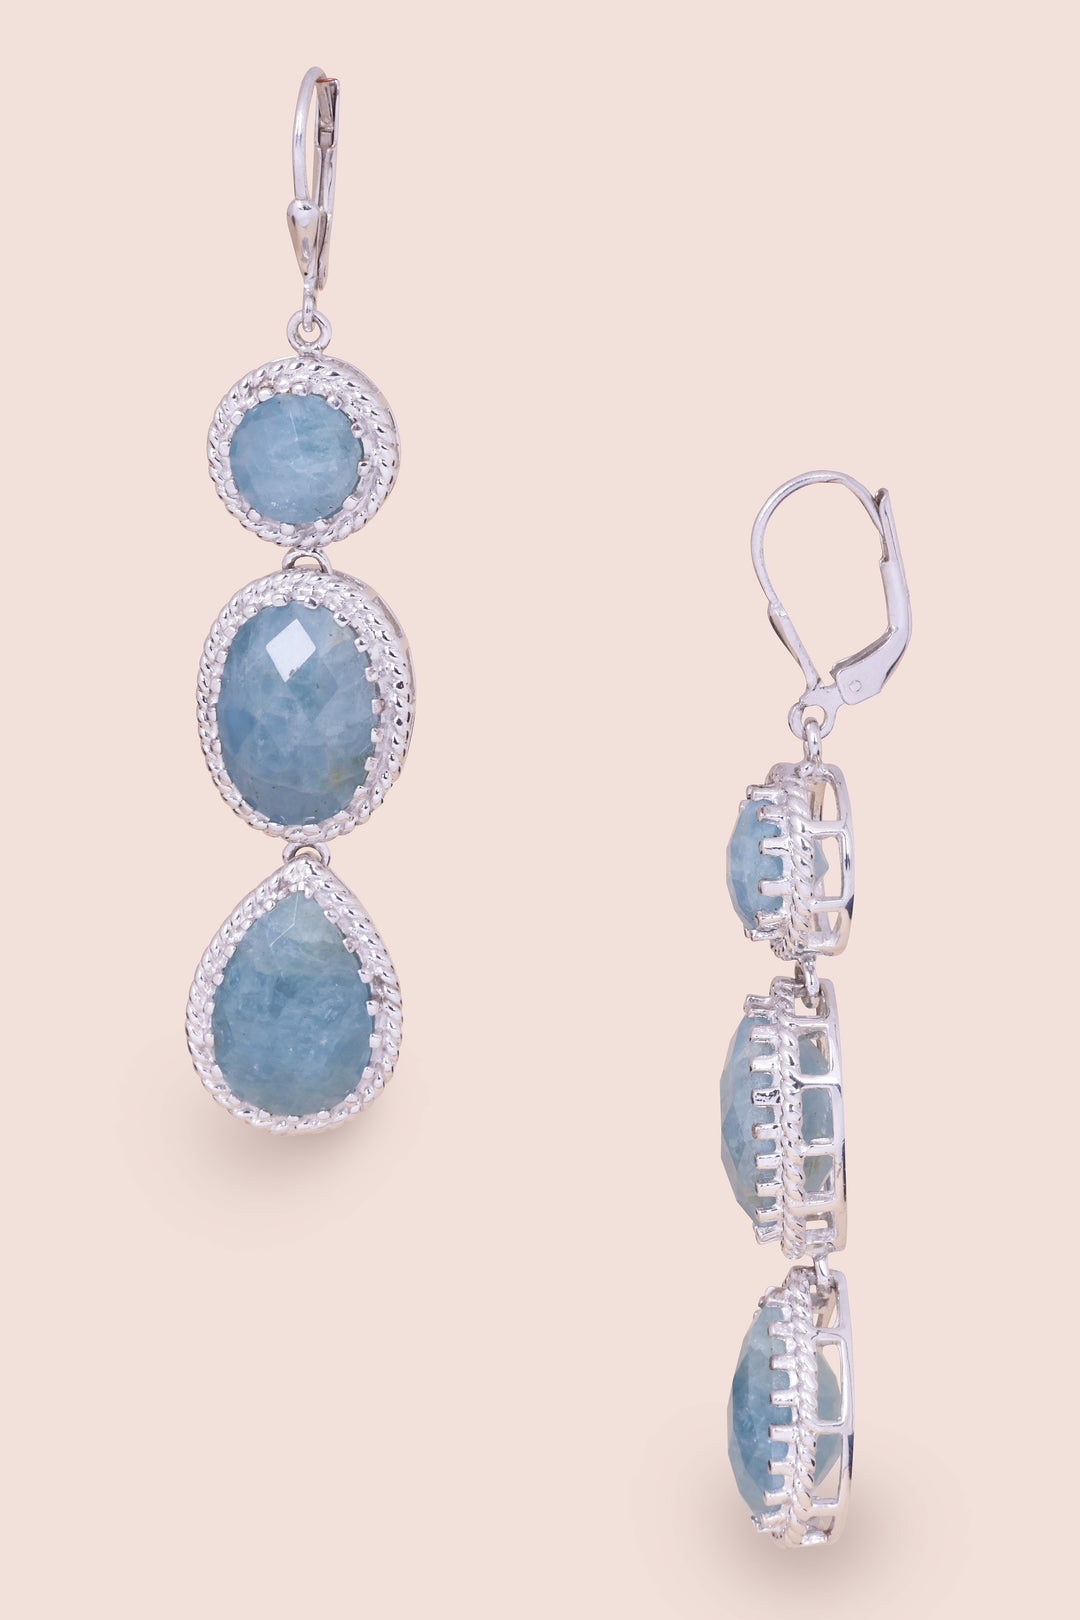 Aquamarine (Milky) Sterling Silver Drop Earring 10067029